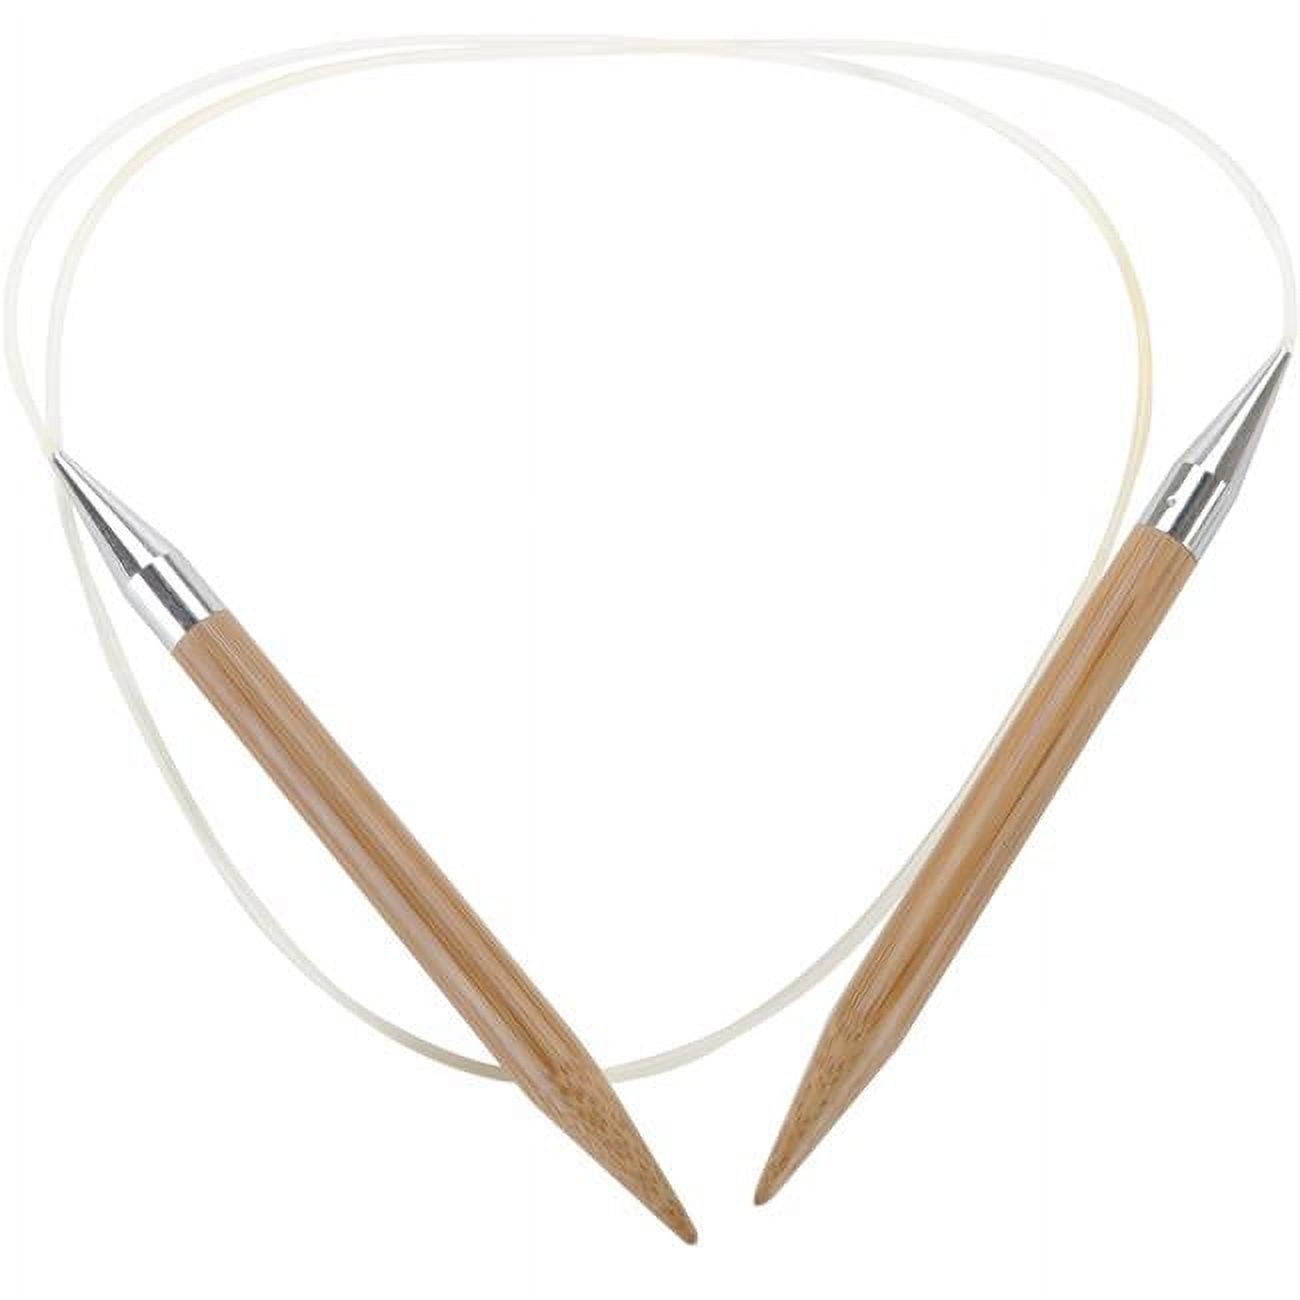 ChiaoGoo 2040-8 40 in. Bamboo Circular Knitting Needles - Size 8-5 mm 